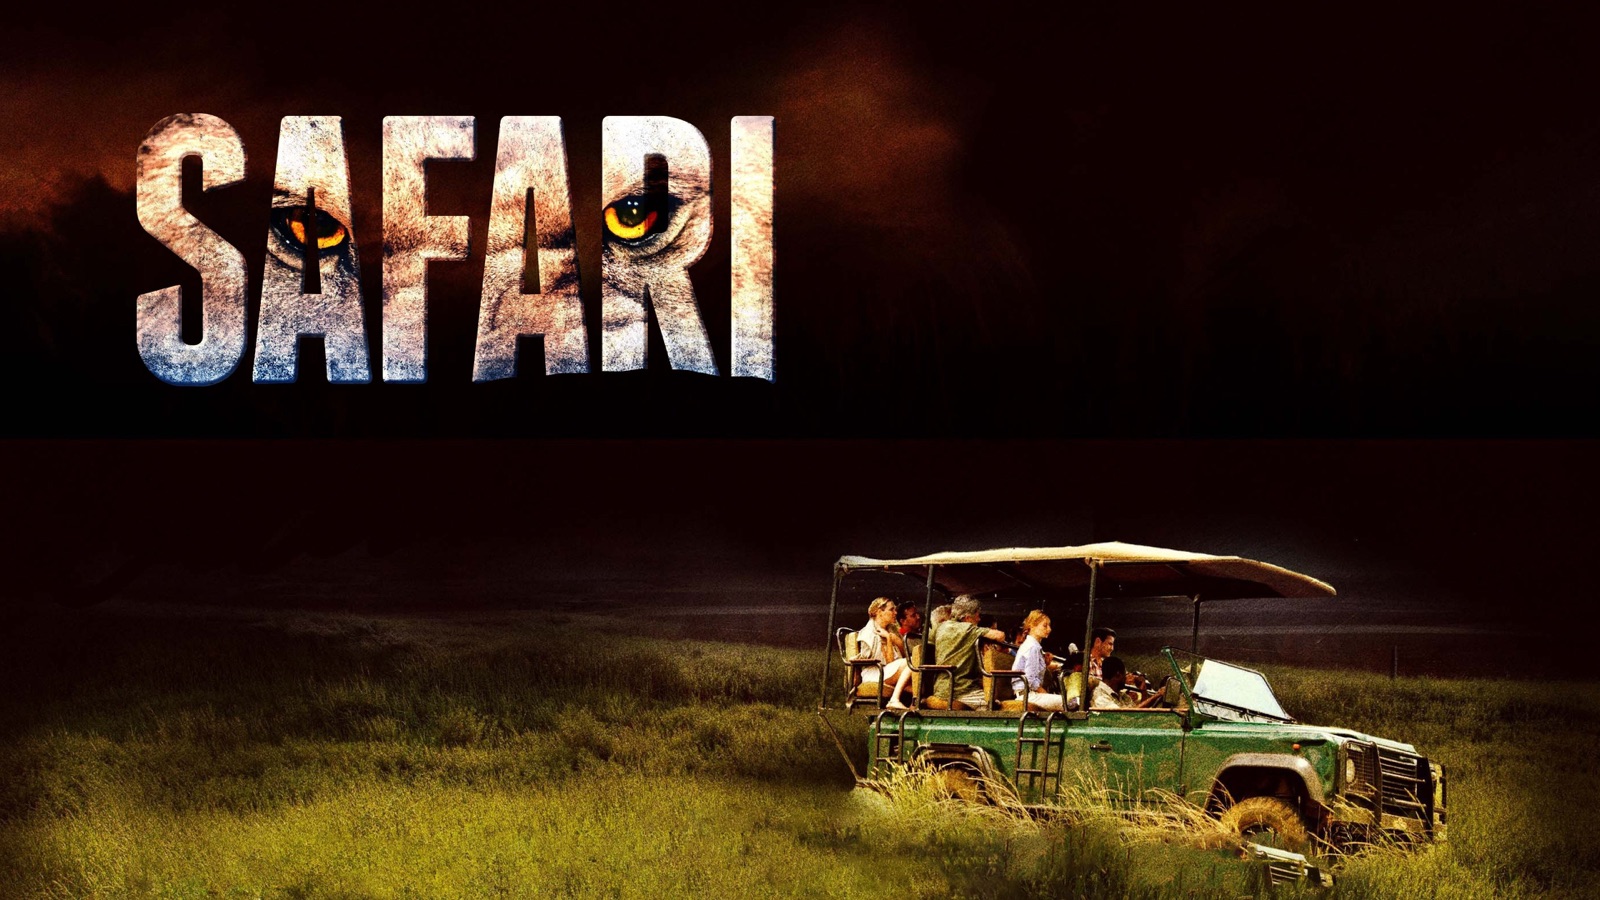 cast safari on tv